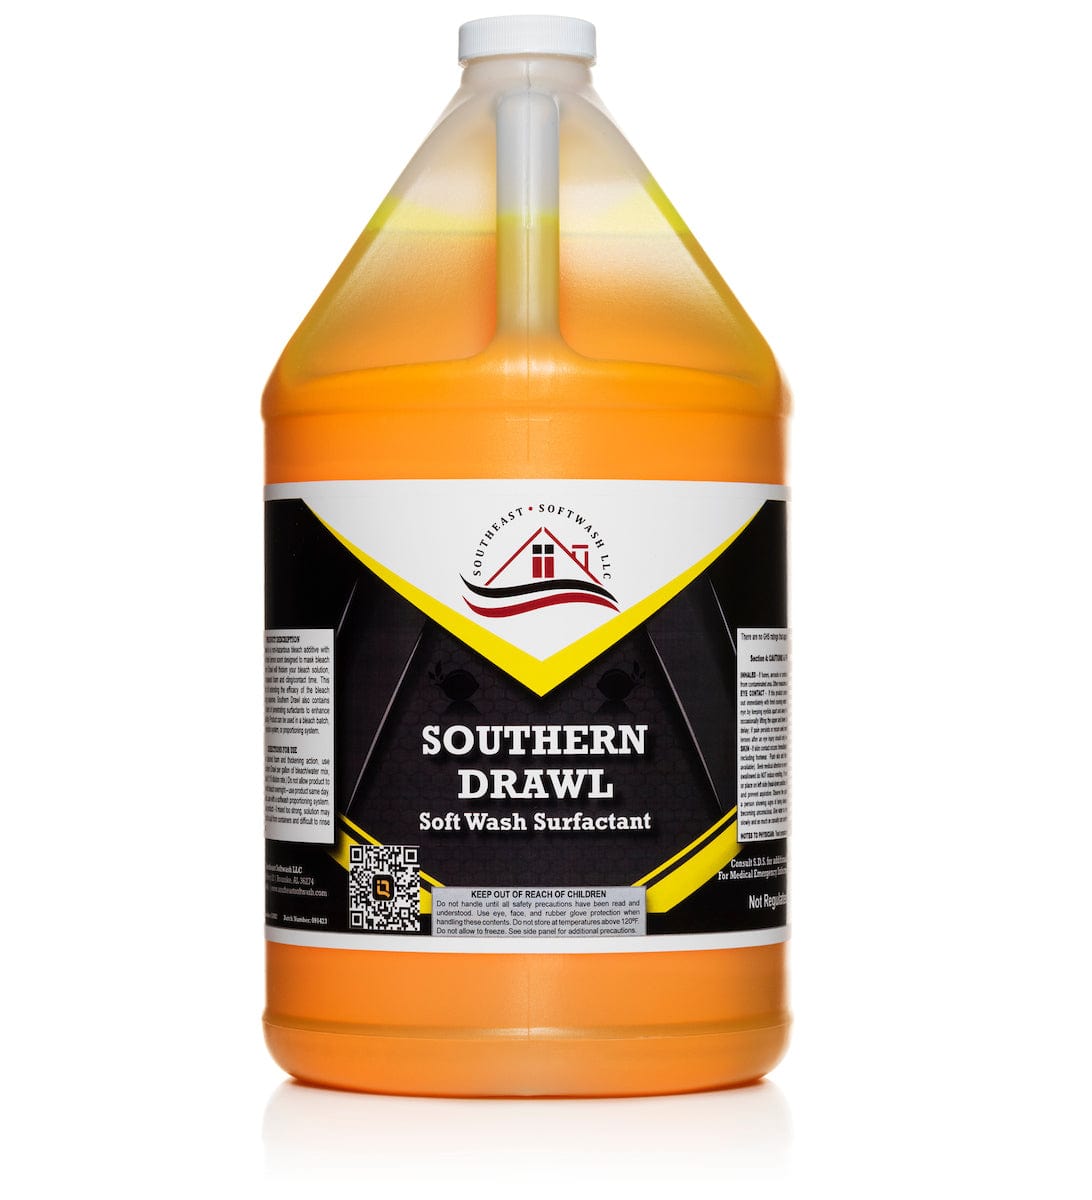 Citrus “Southern Drawl” Surfactant – Southeast Softwash